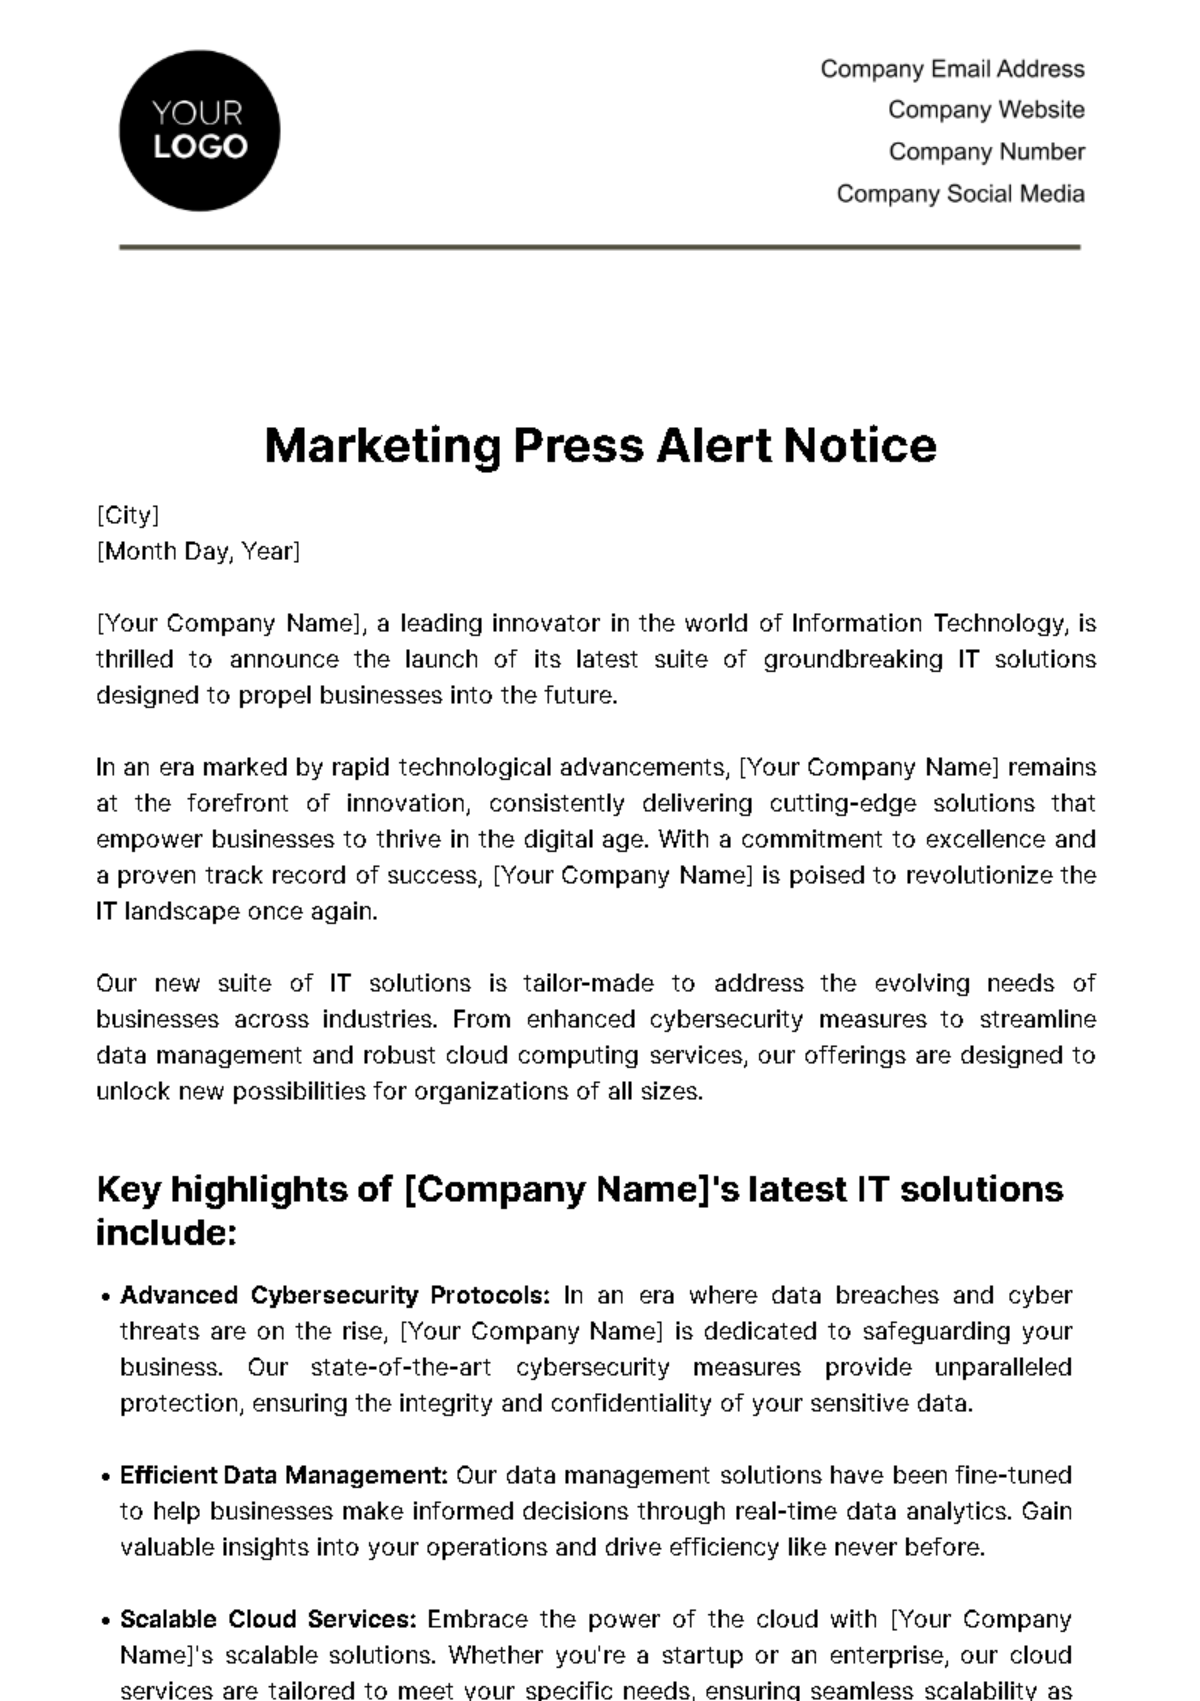 Marketing Press Alert Notice Template